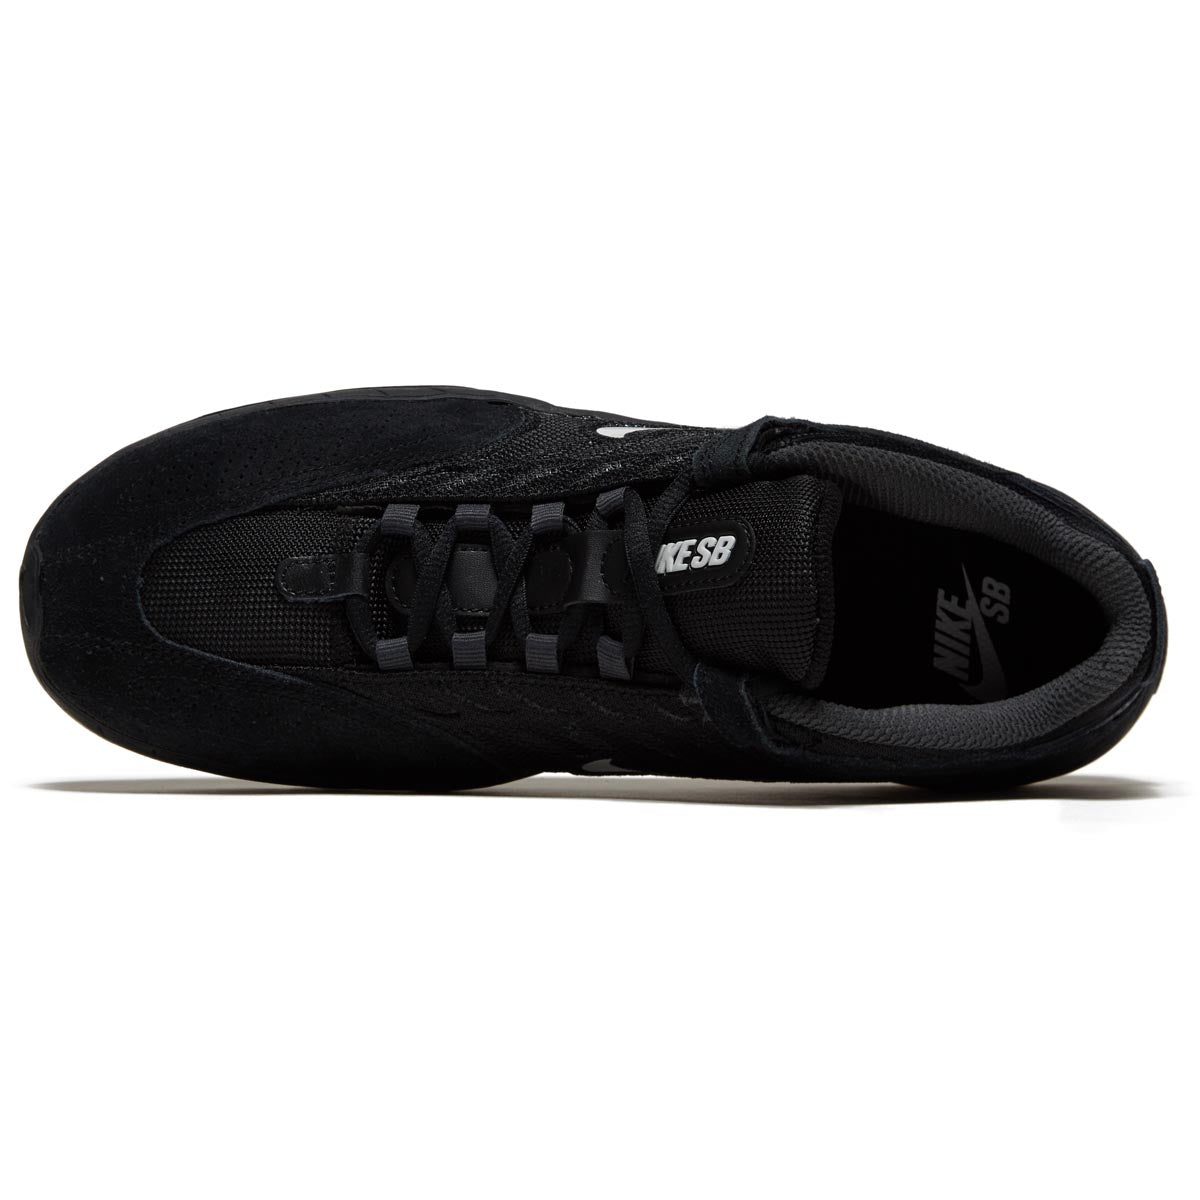 Nike SB Vertebrae Shoes - Black/Summit White/Anthracite/Black image 3